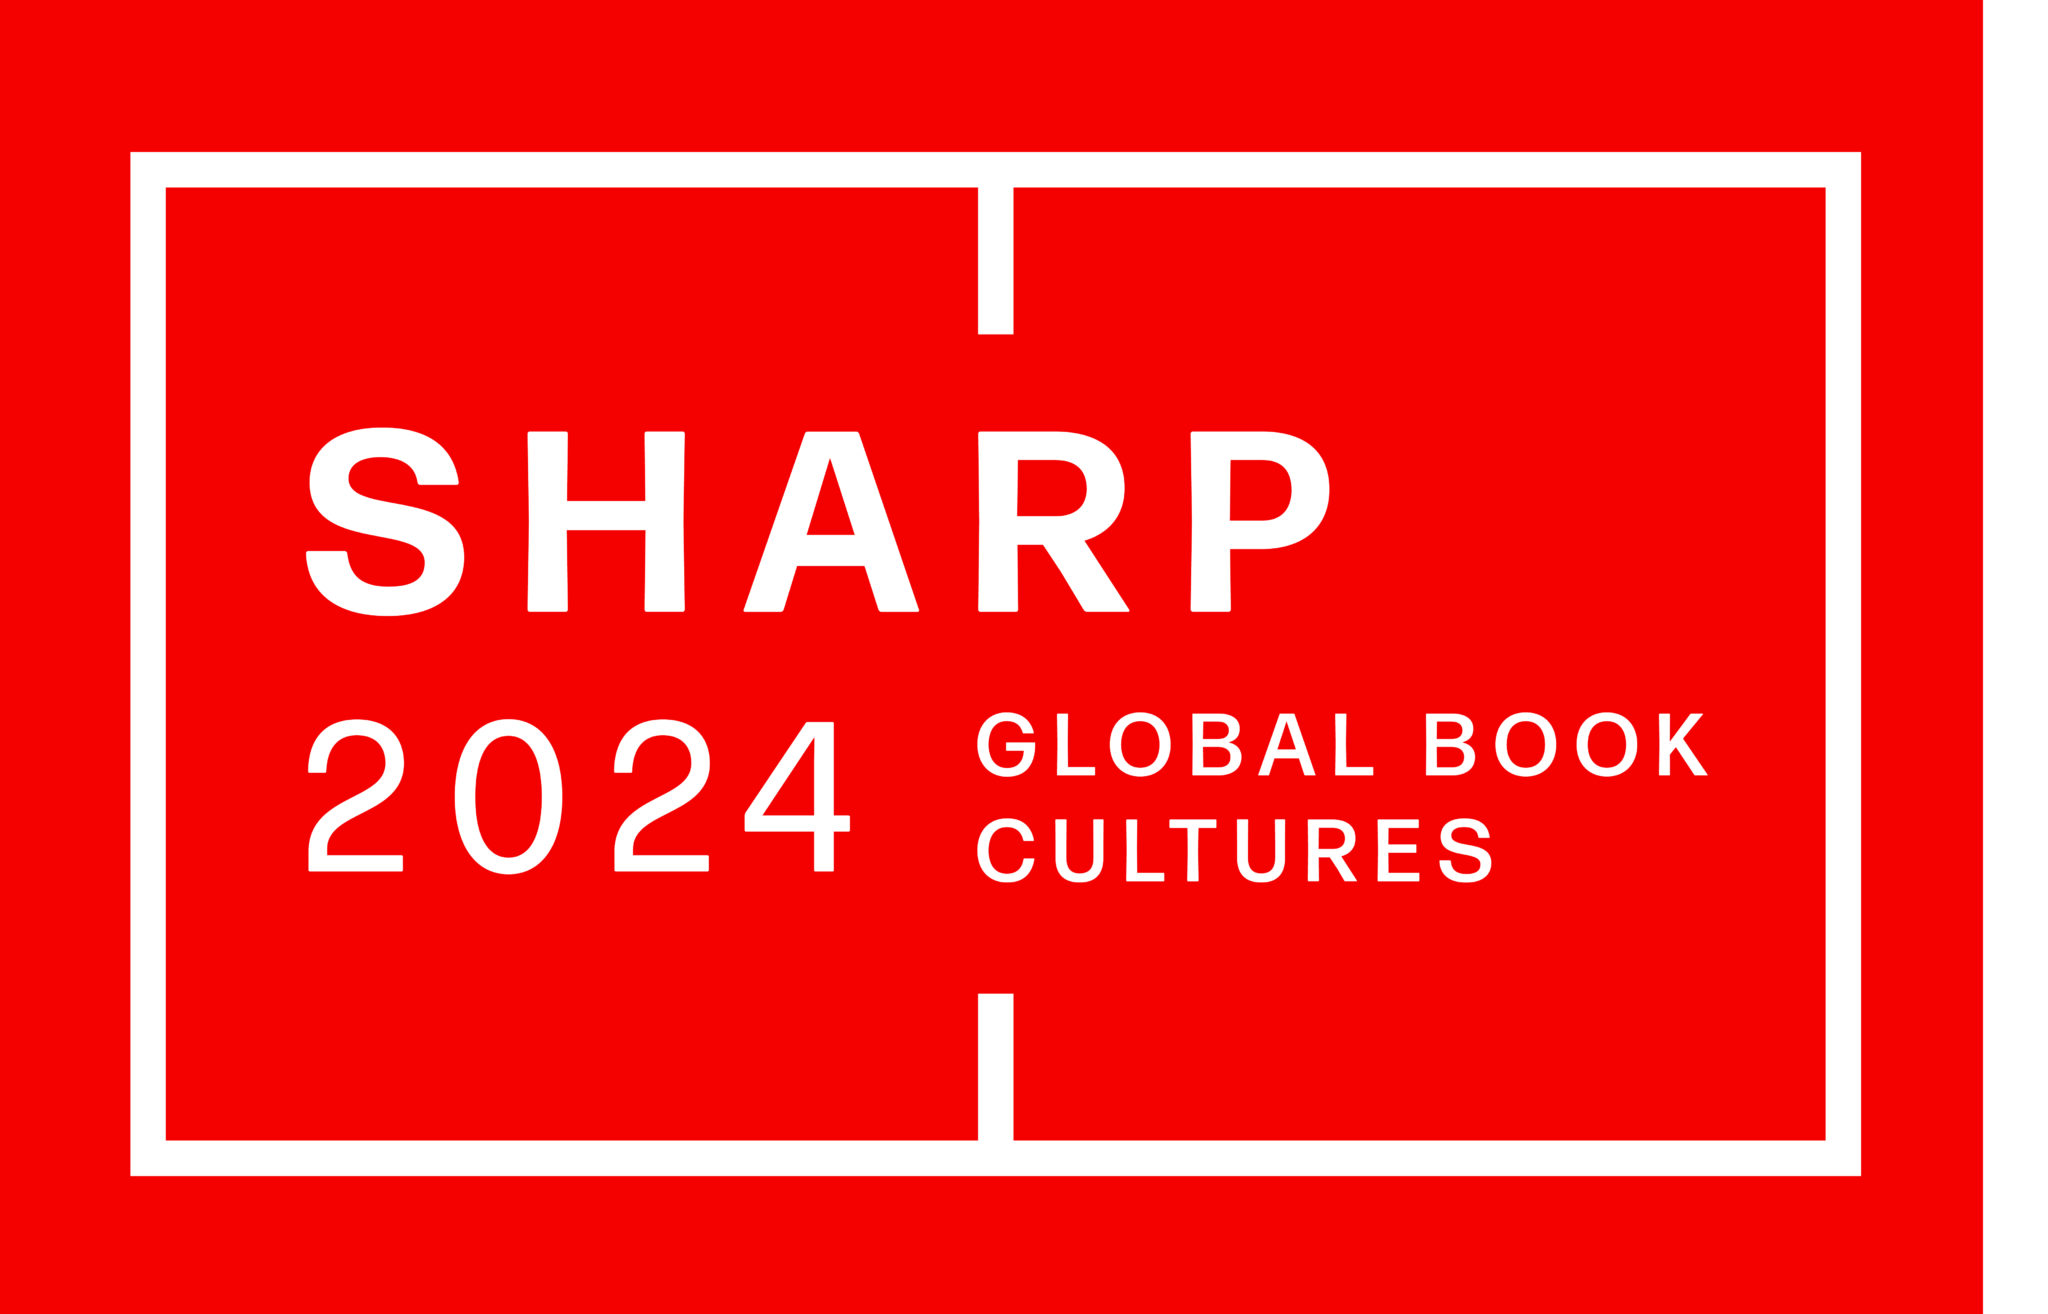 SHARP 2024 Global Book Cultures